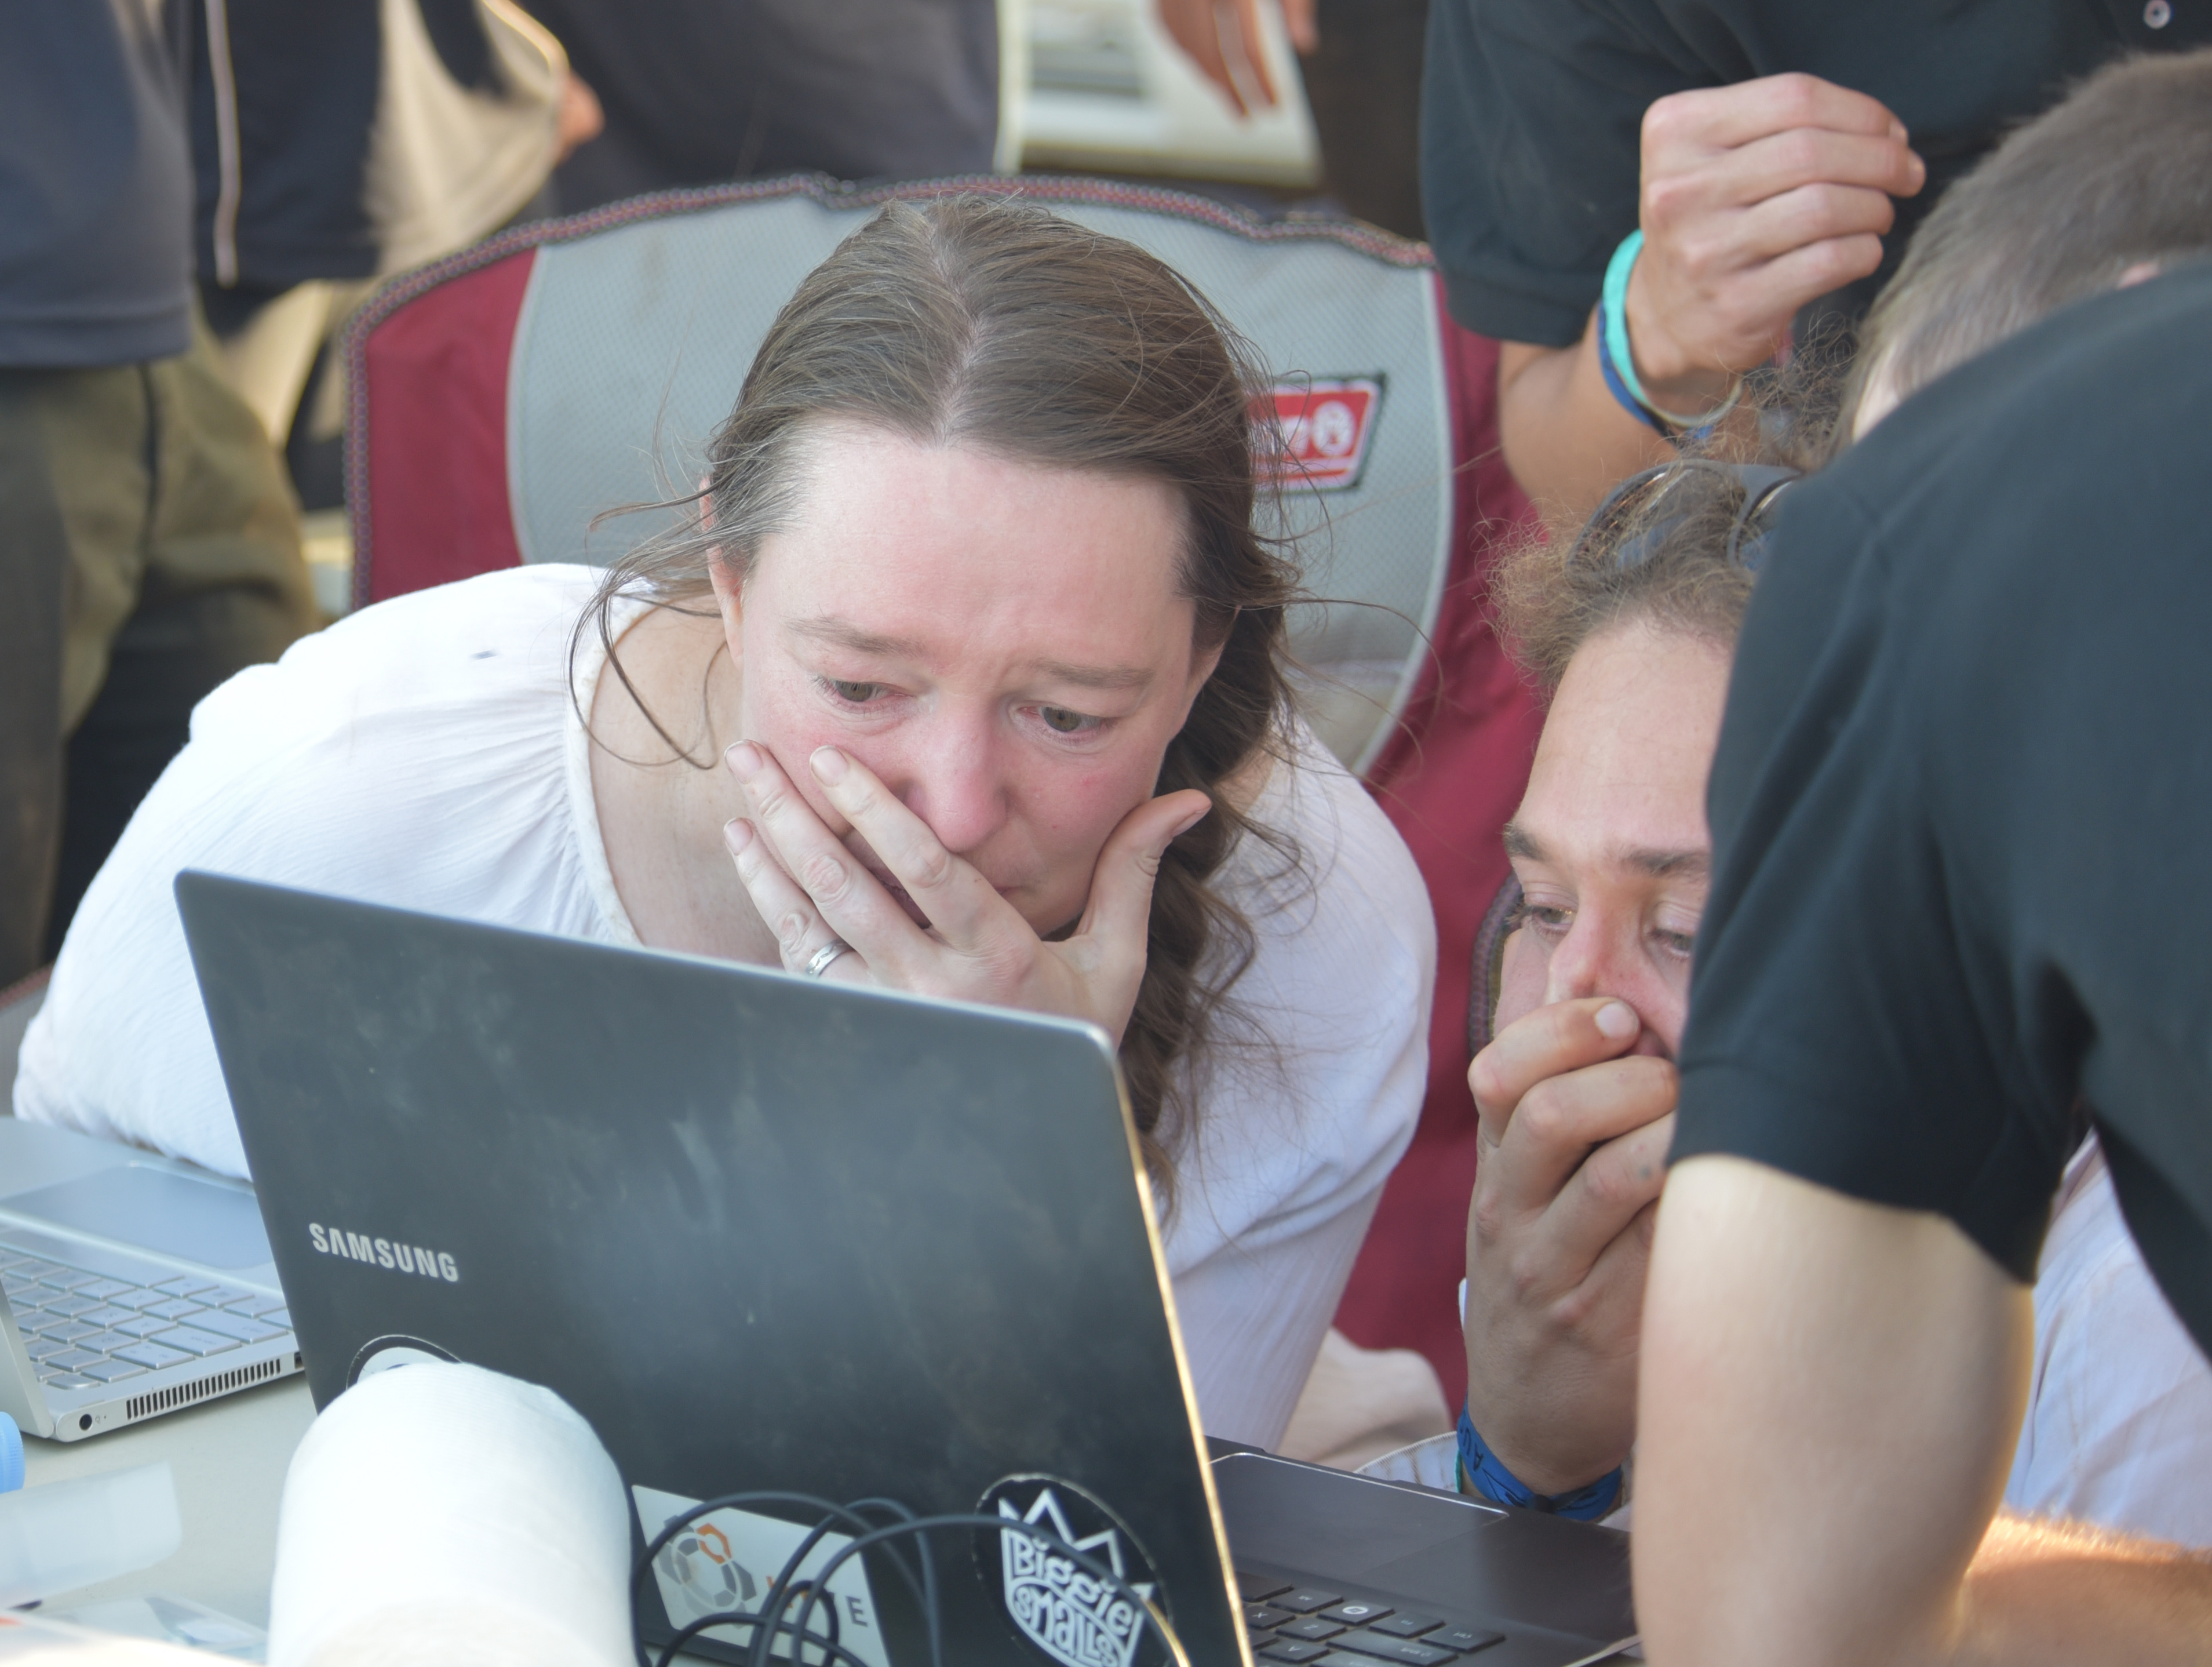 Emotional team members watch the winning launch.